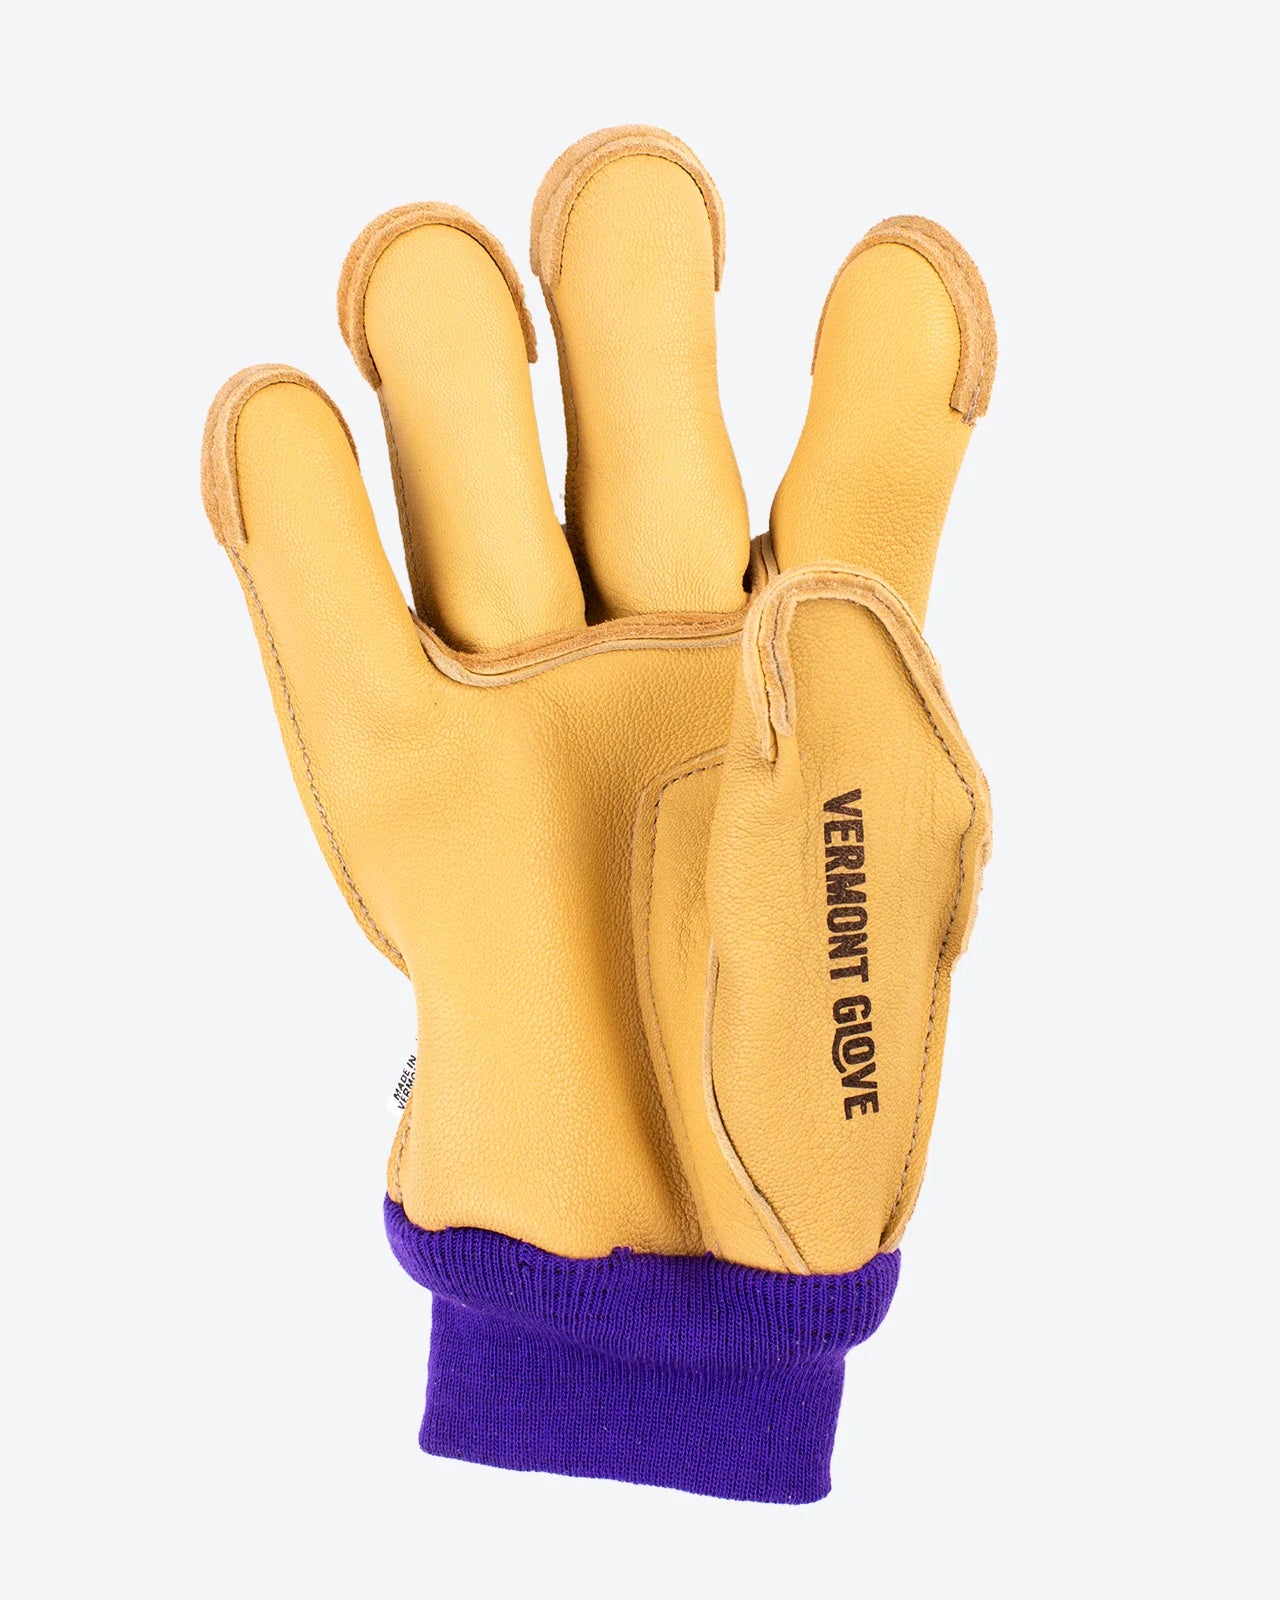 Tuttle Glove